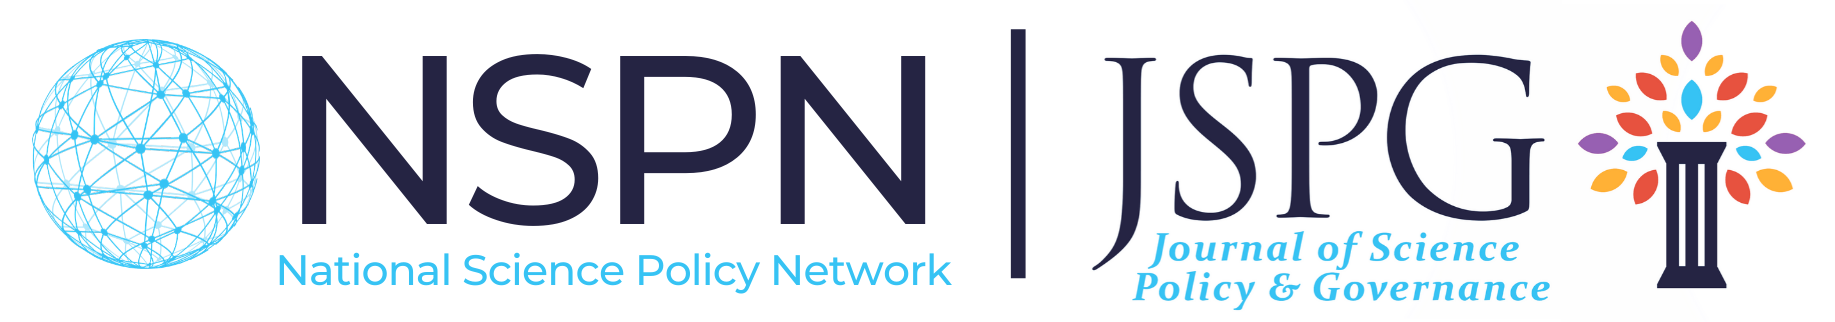 NSPN & JSPG Launch announcement joint logos